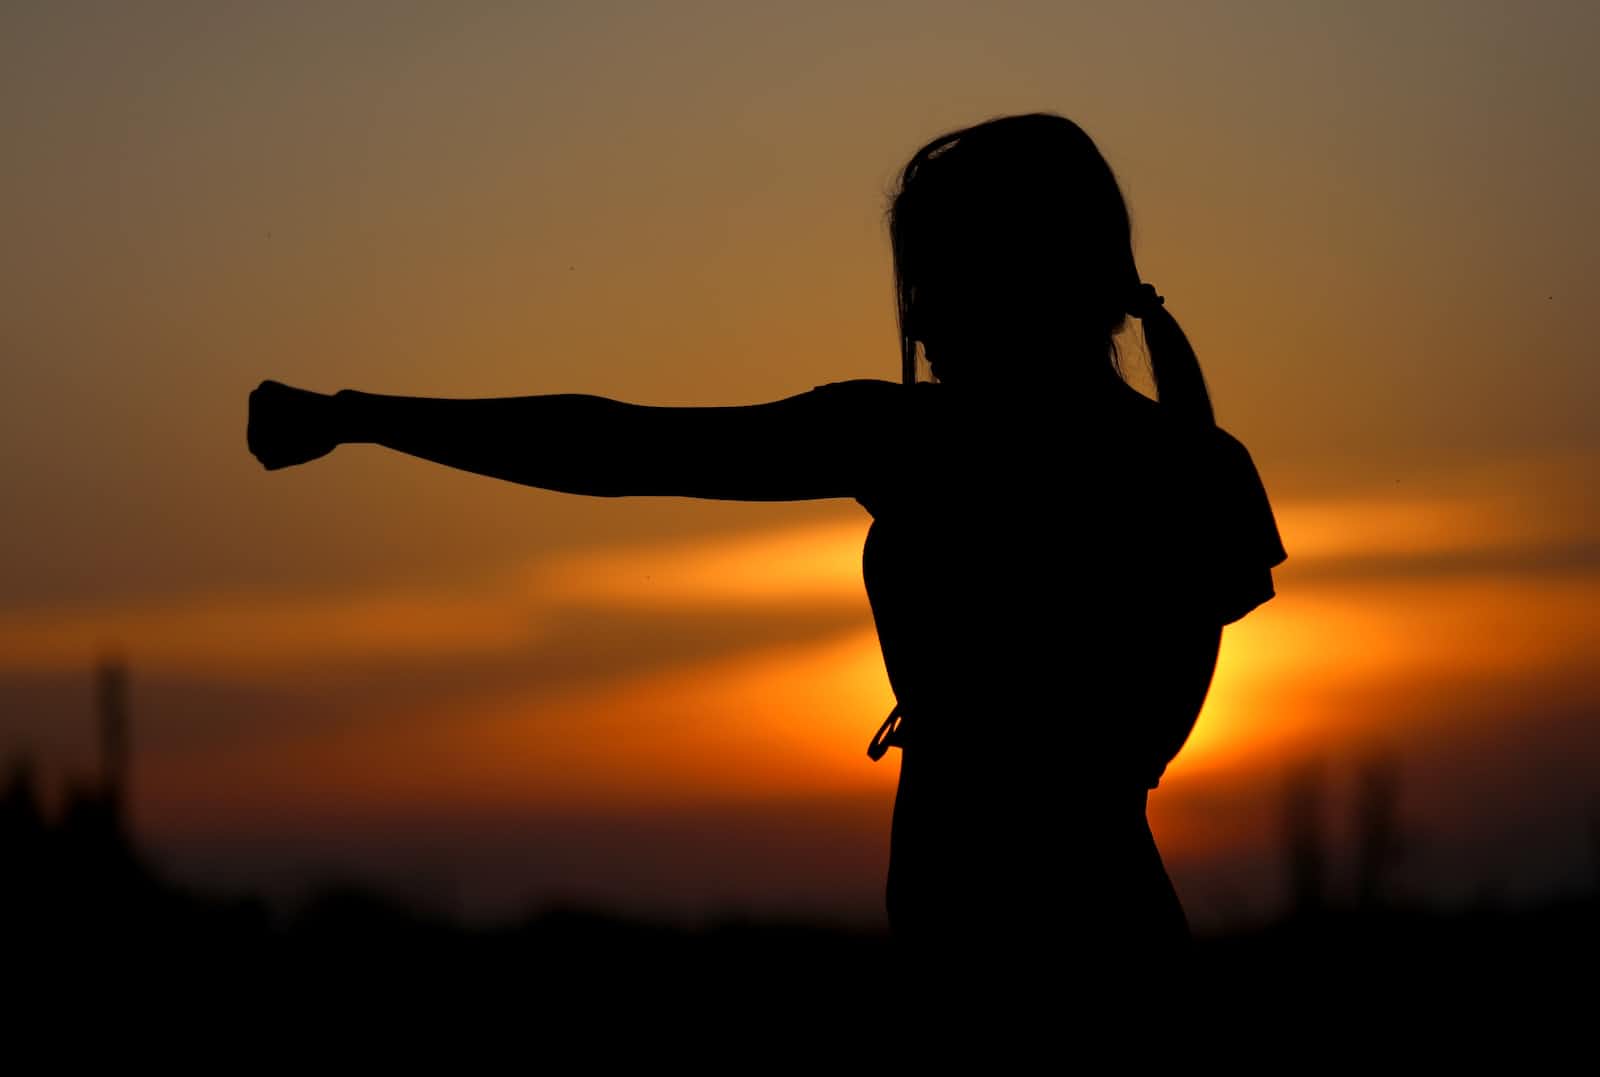 Shadow of woman practising kung fu at sunset